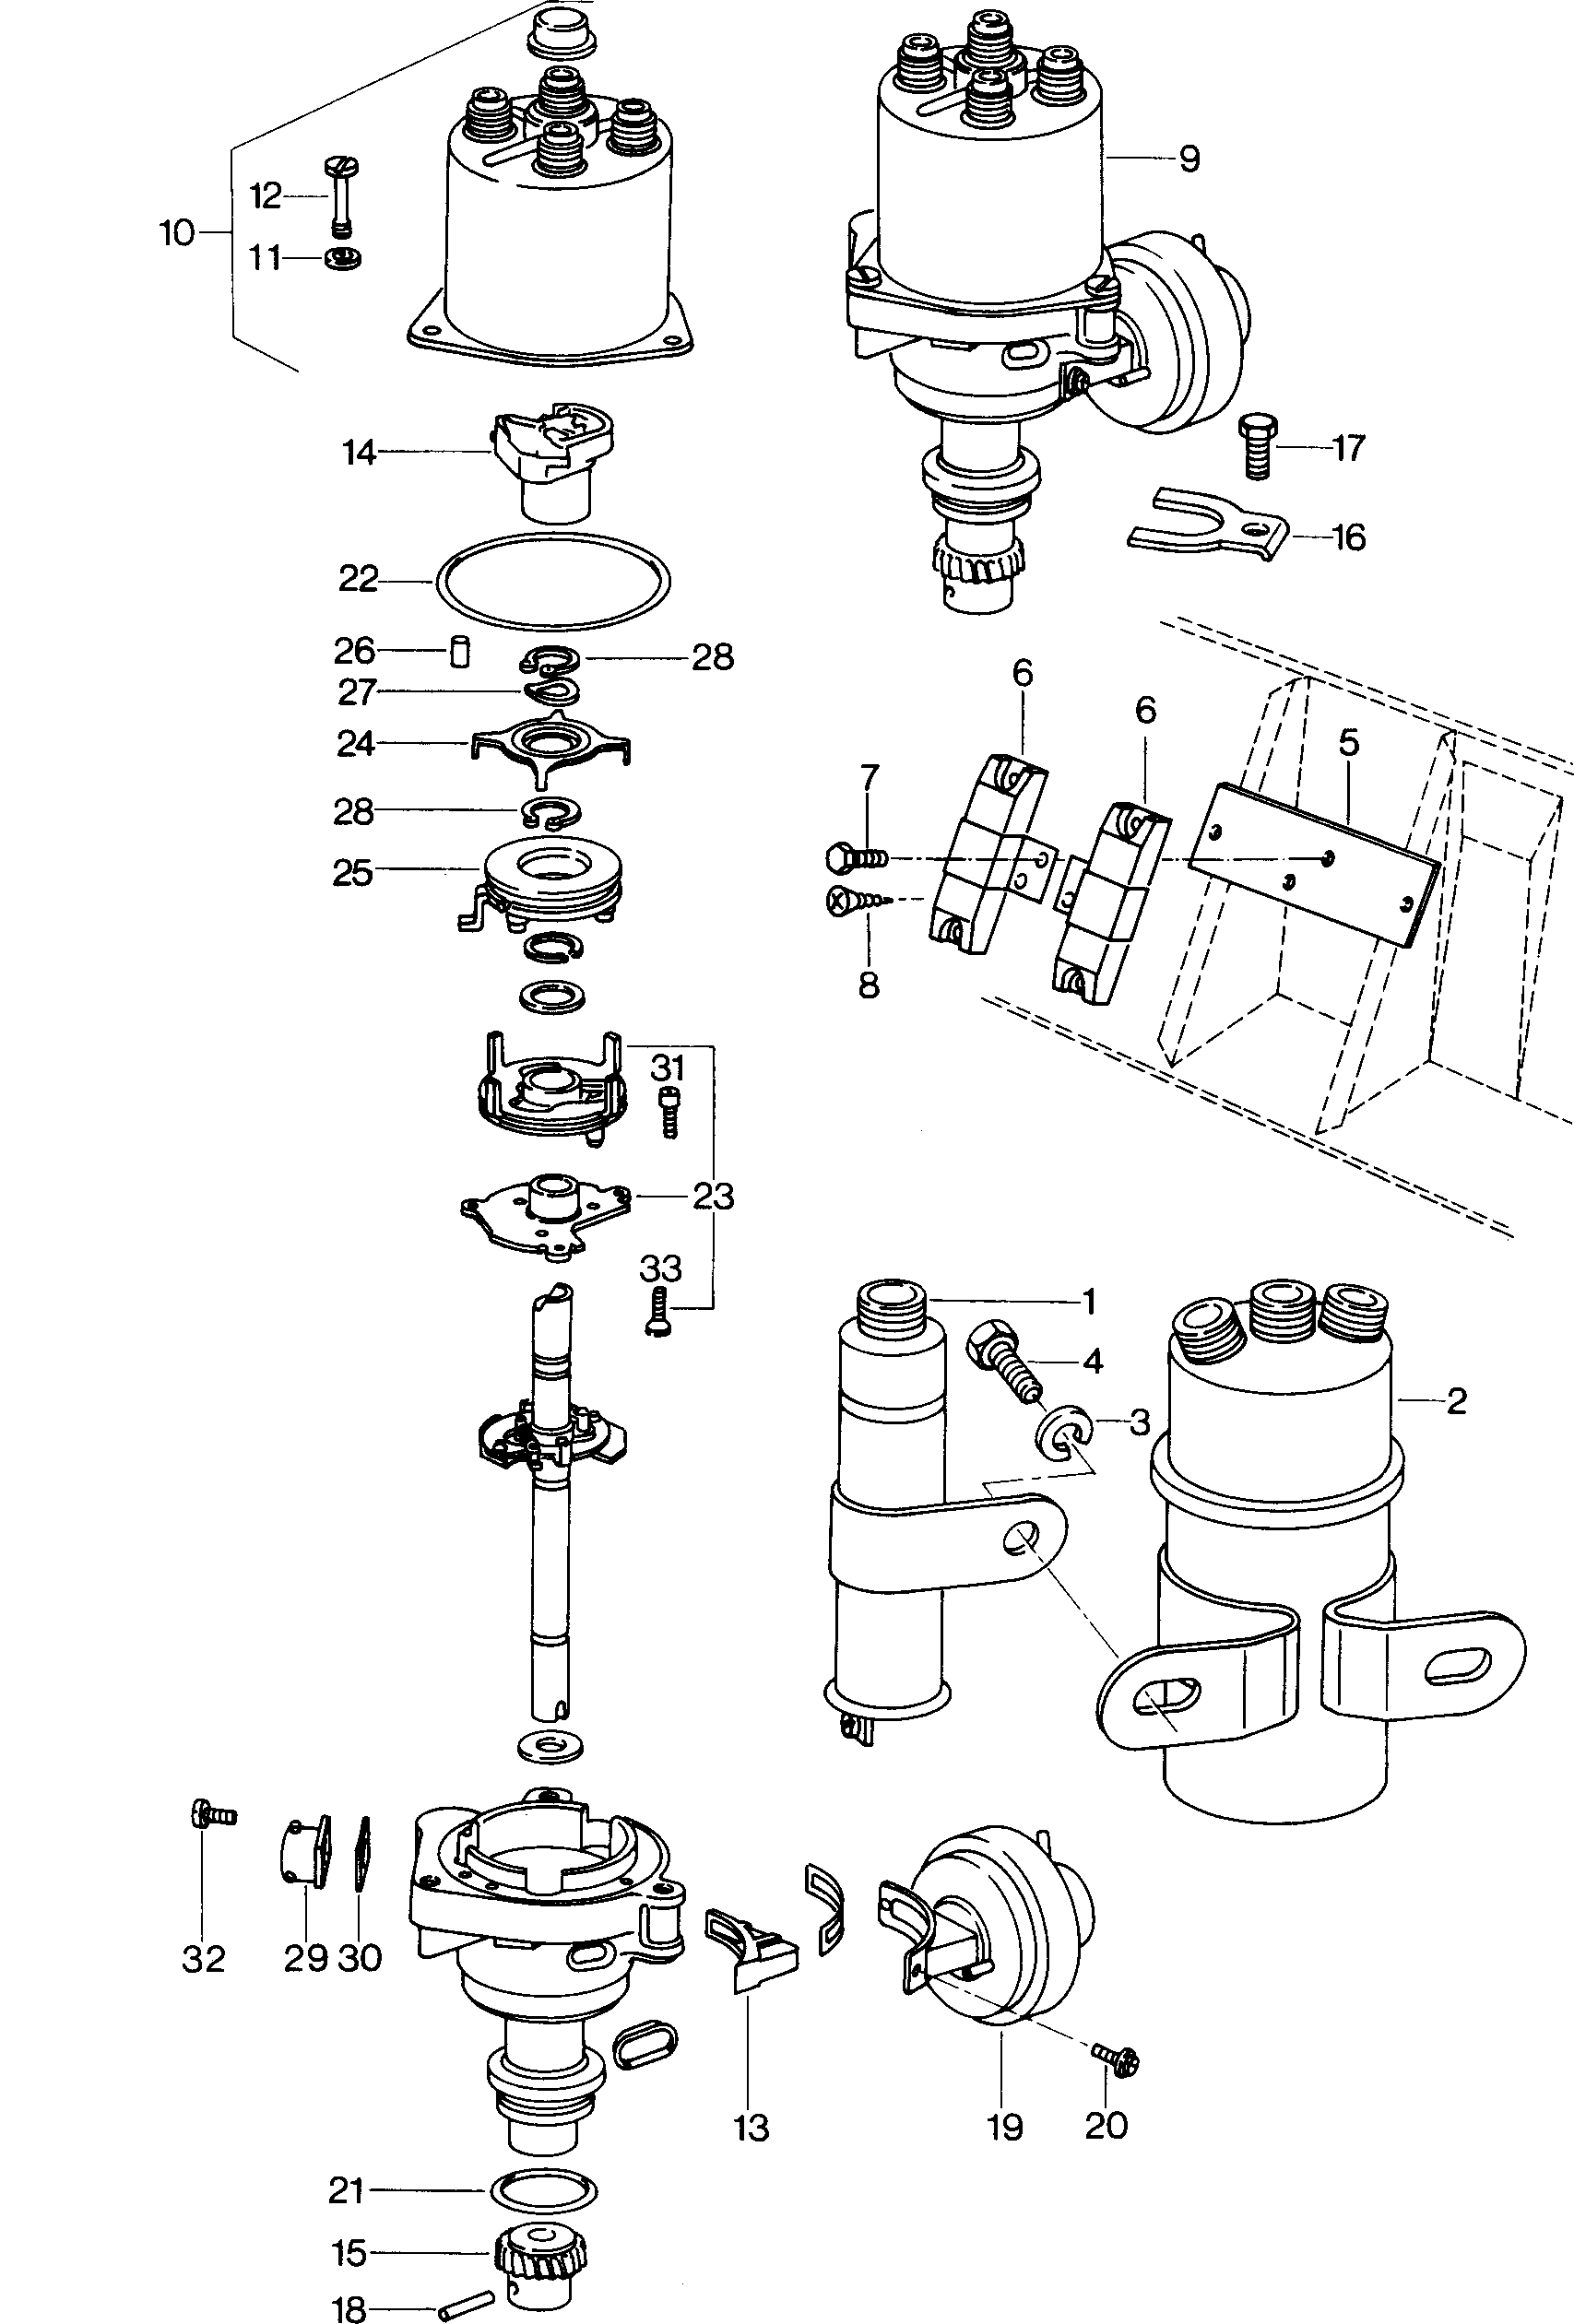 bobinestroomverdeler 24V - Mod.181 / Iltis - ilt